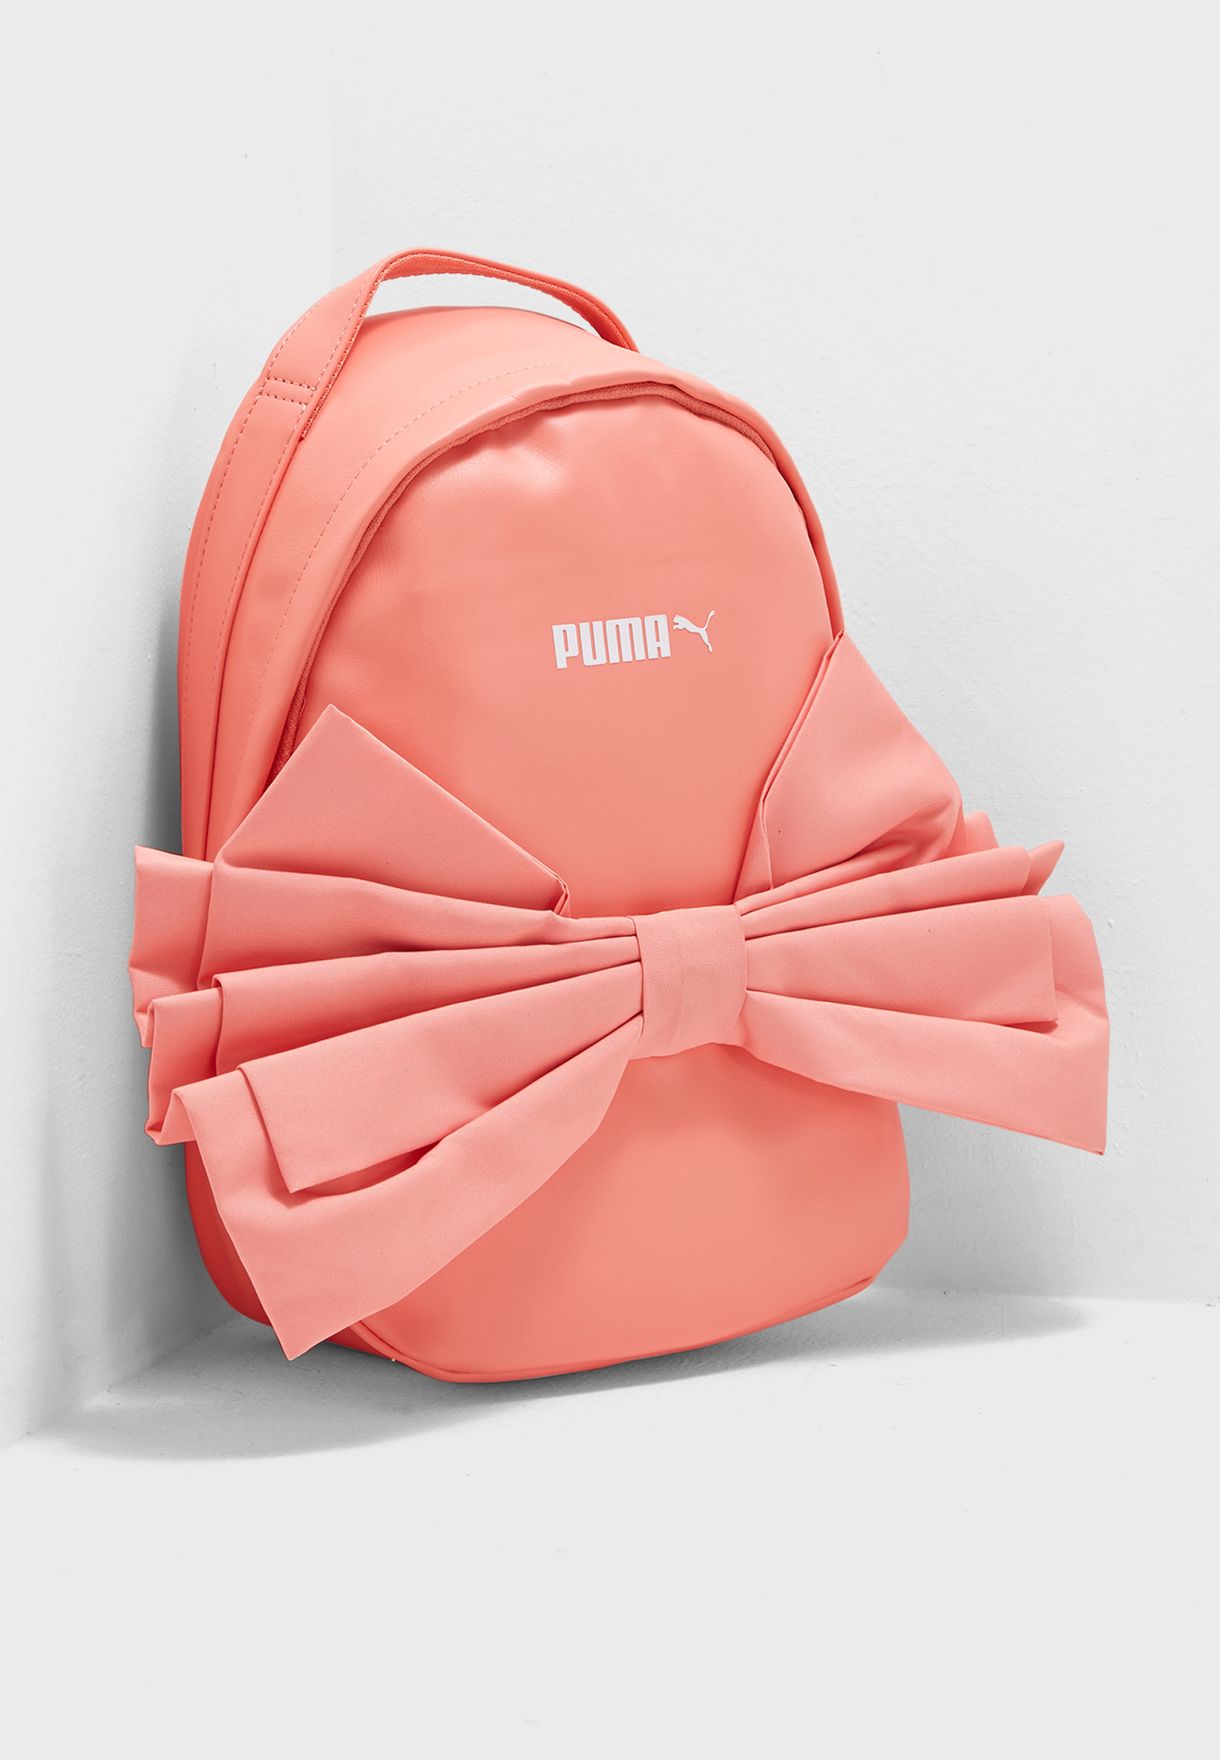 puma ribbon bag